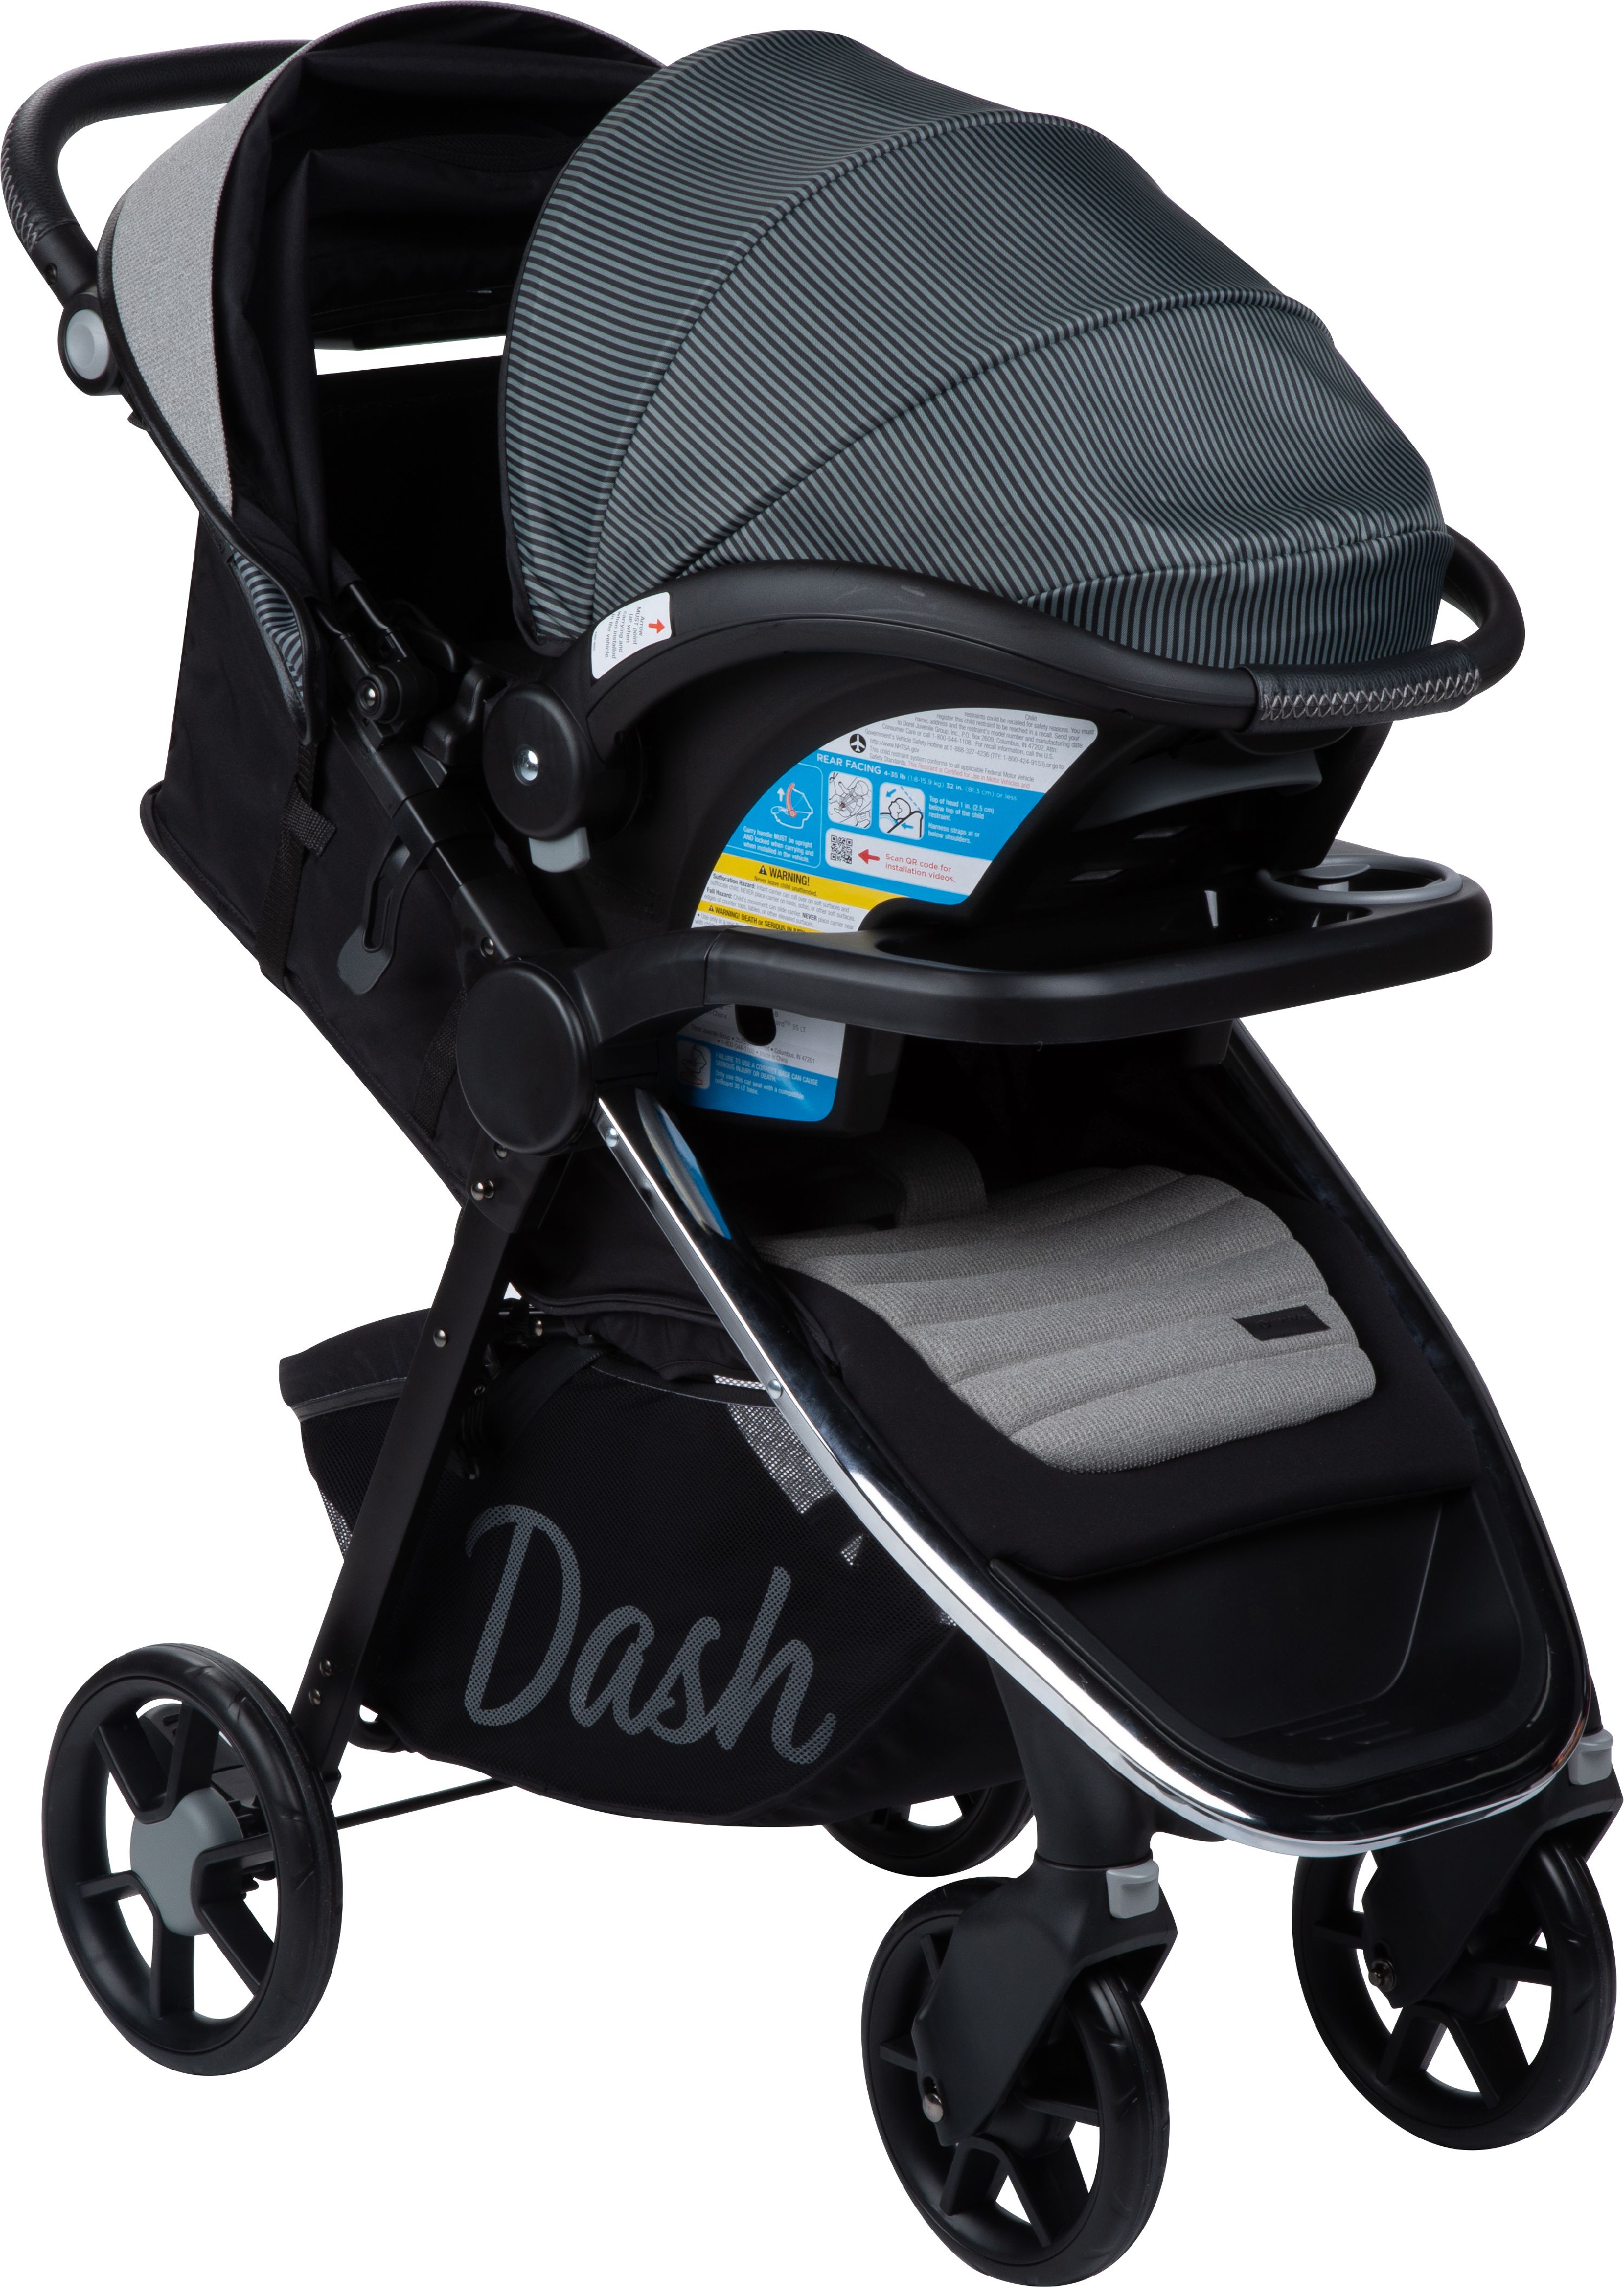 Monbebe Dash Travel System Stroller and Infant Car Seat, Pinstripe - image 4 of 13